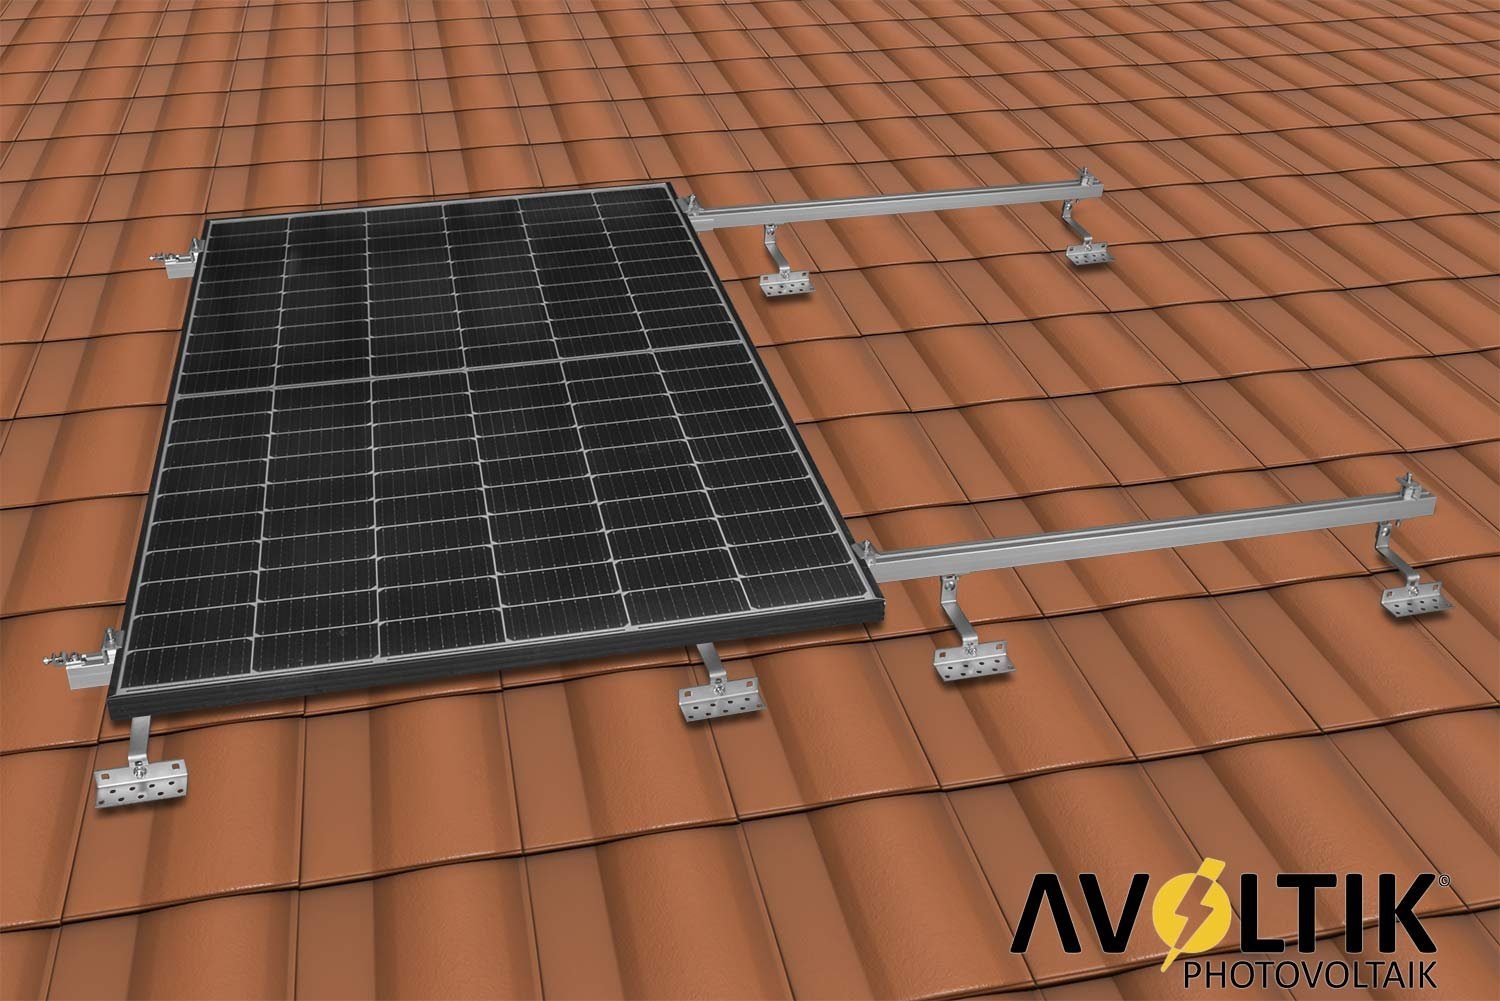 Solarmodul avoltik Montageset Befestigung Solarmodule f Solar-Halterung 2 Dach Ziegeldach